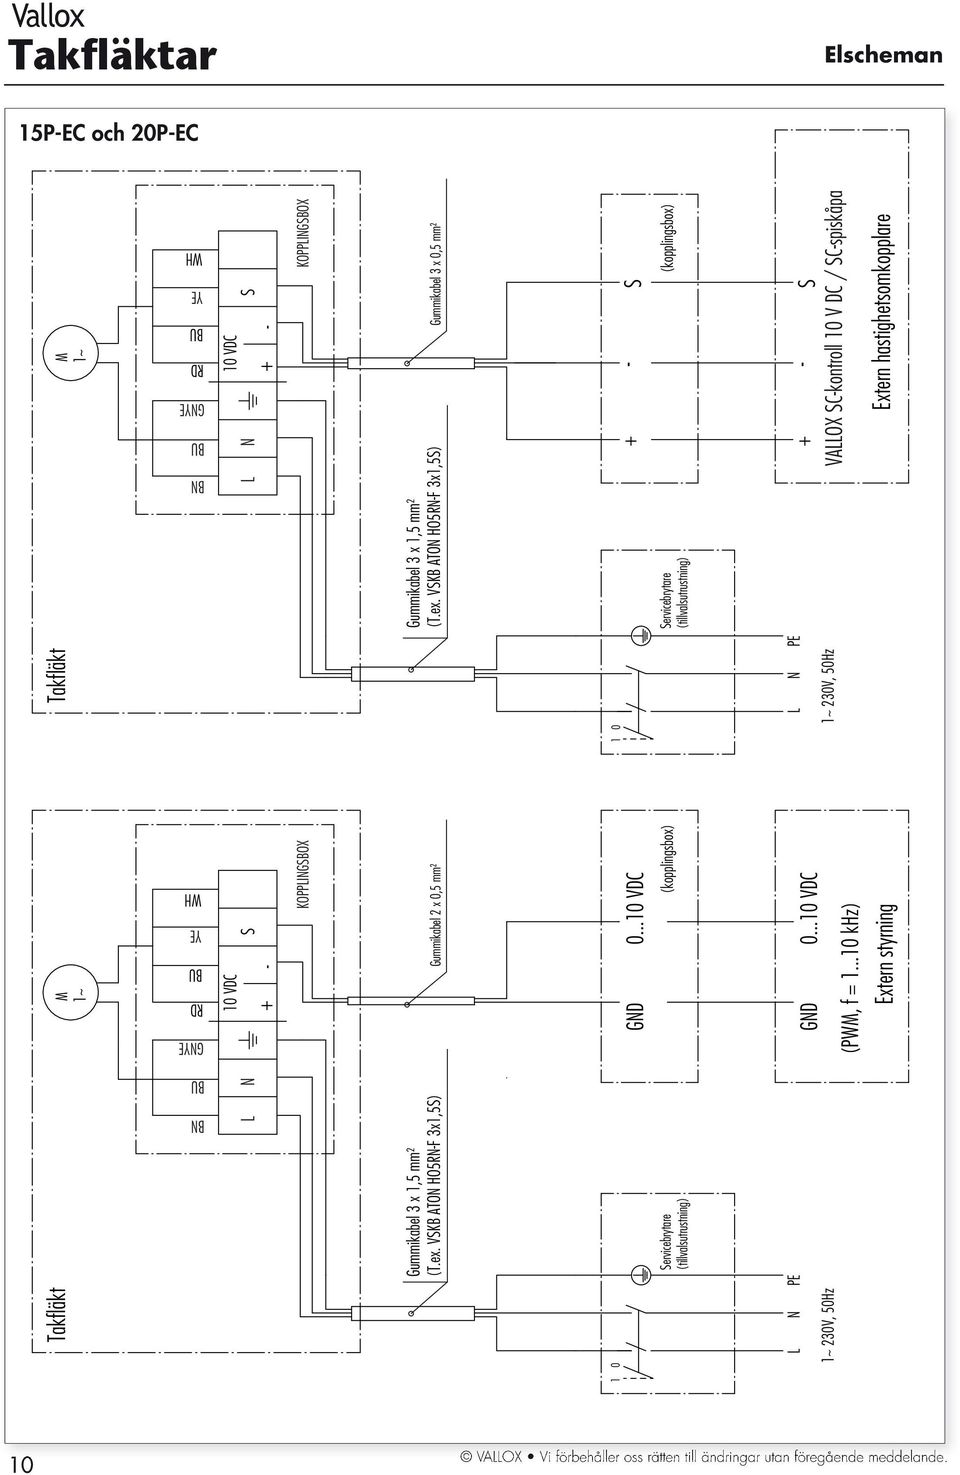 ..1 VDC 1 + - Servicebrytare (tillvalsutrustning) (kopplingsbox) Servicebrytare (kopplingsbox) (tillvalsutrustning) S N L PE PE 1~ 23V, 5Hz.